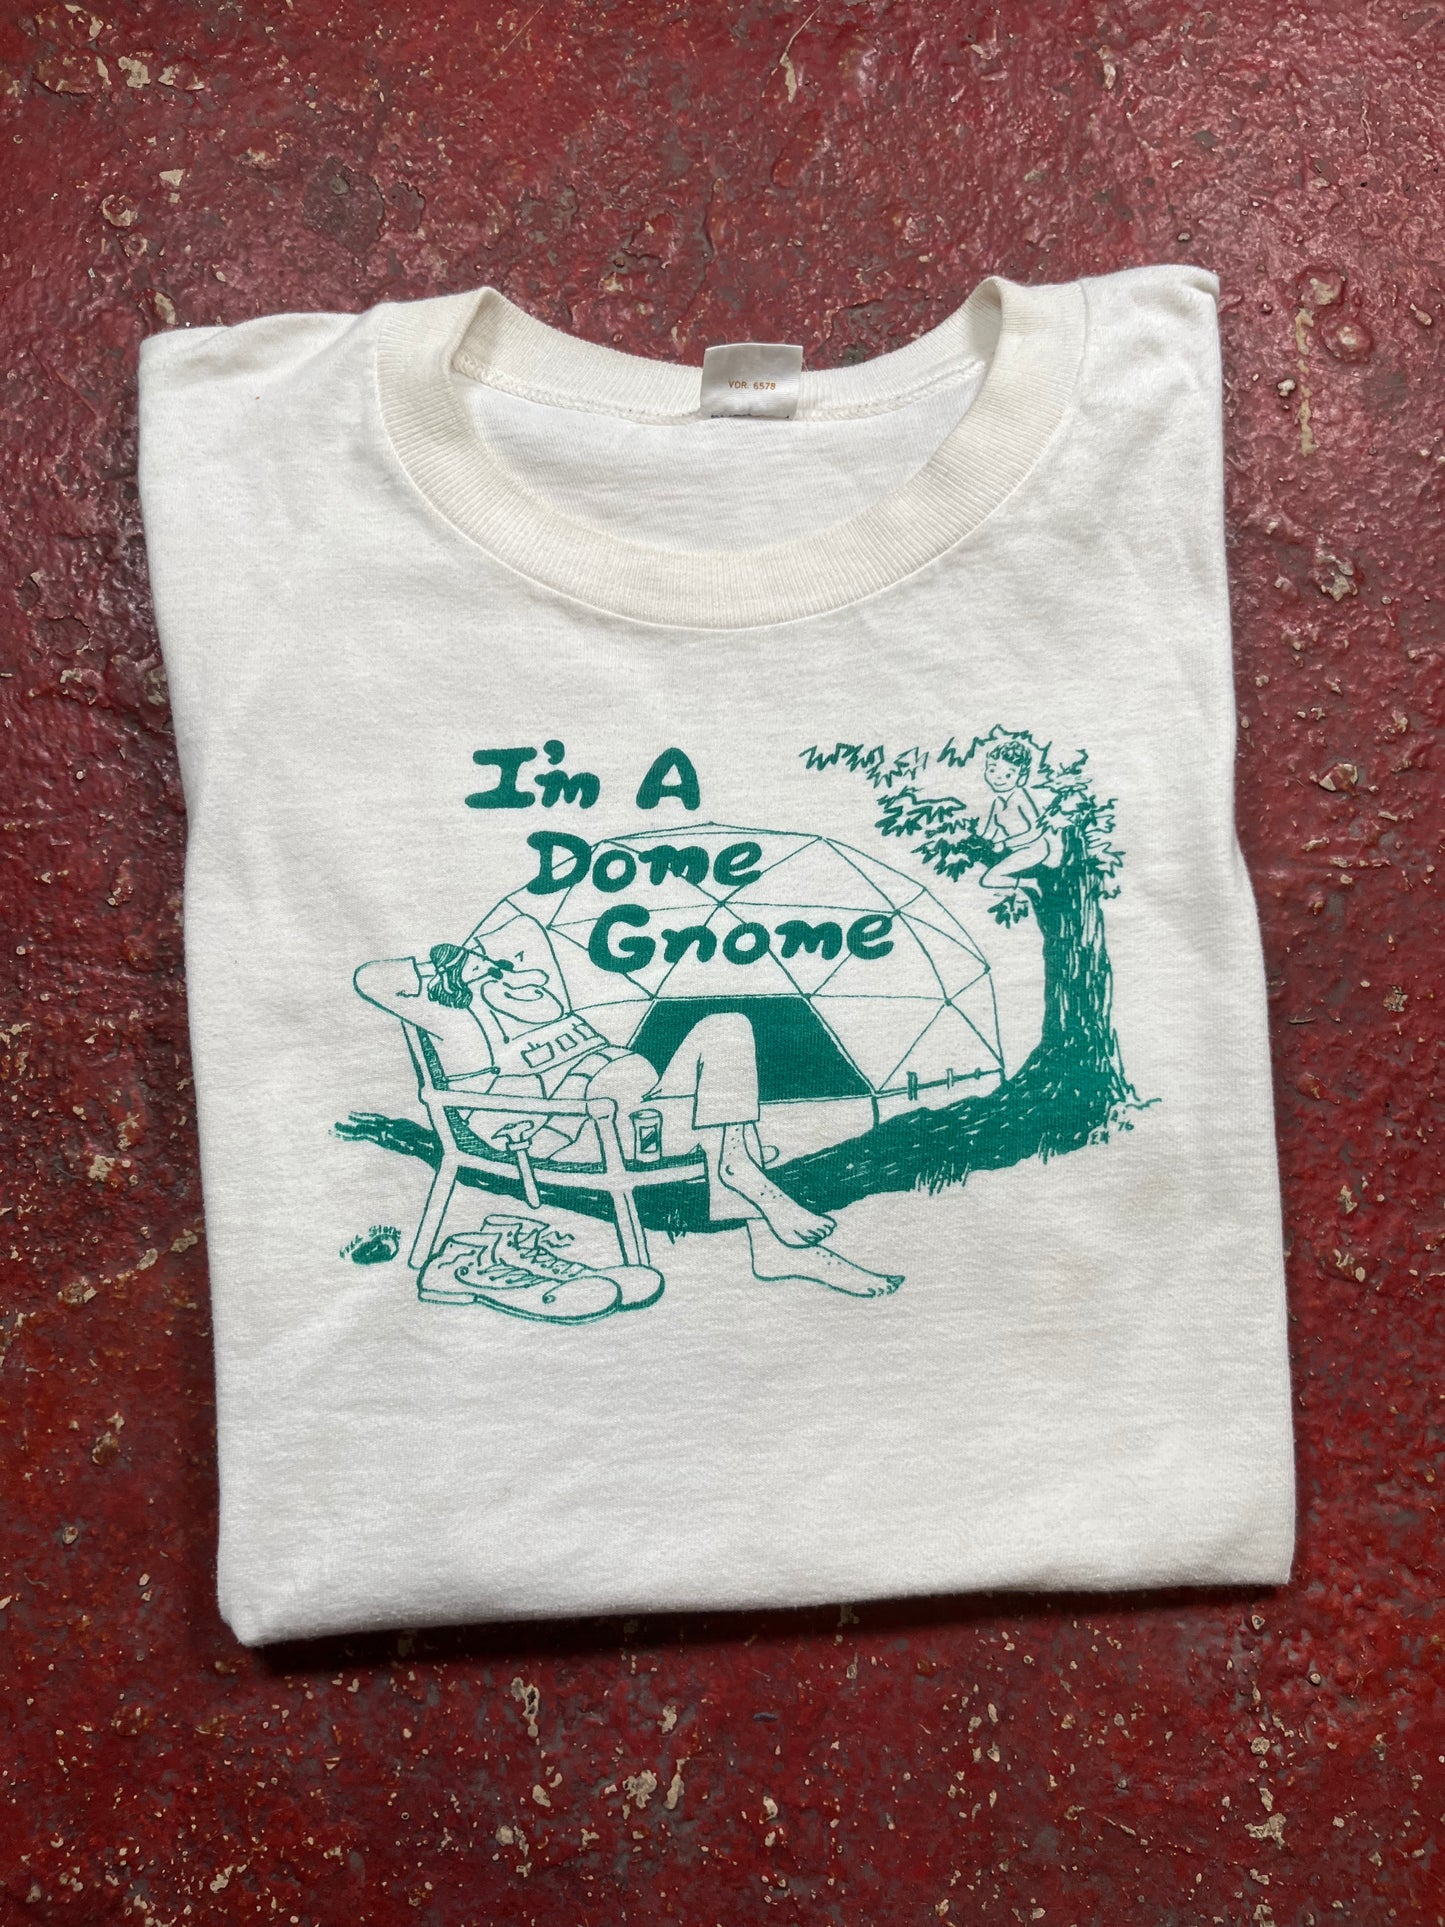 70s Dome Gnome Tee